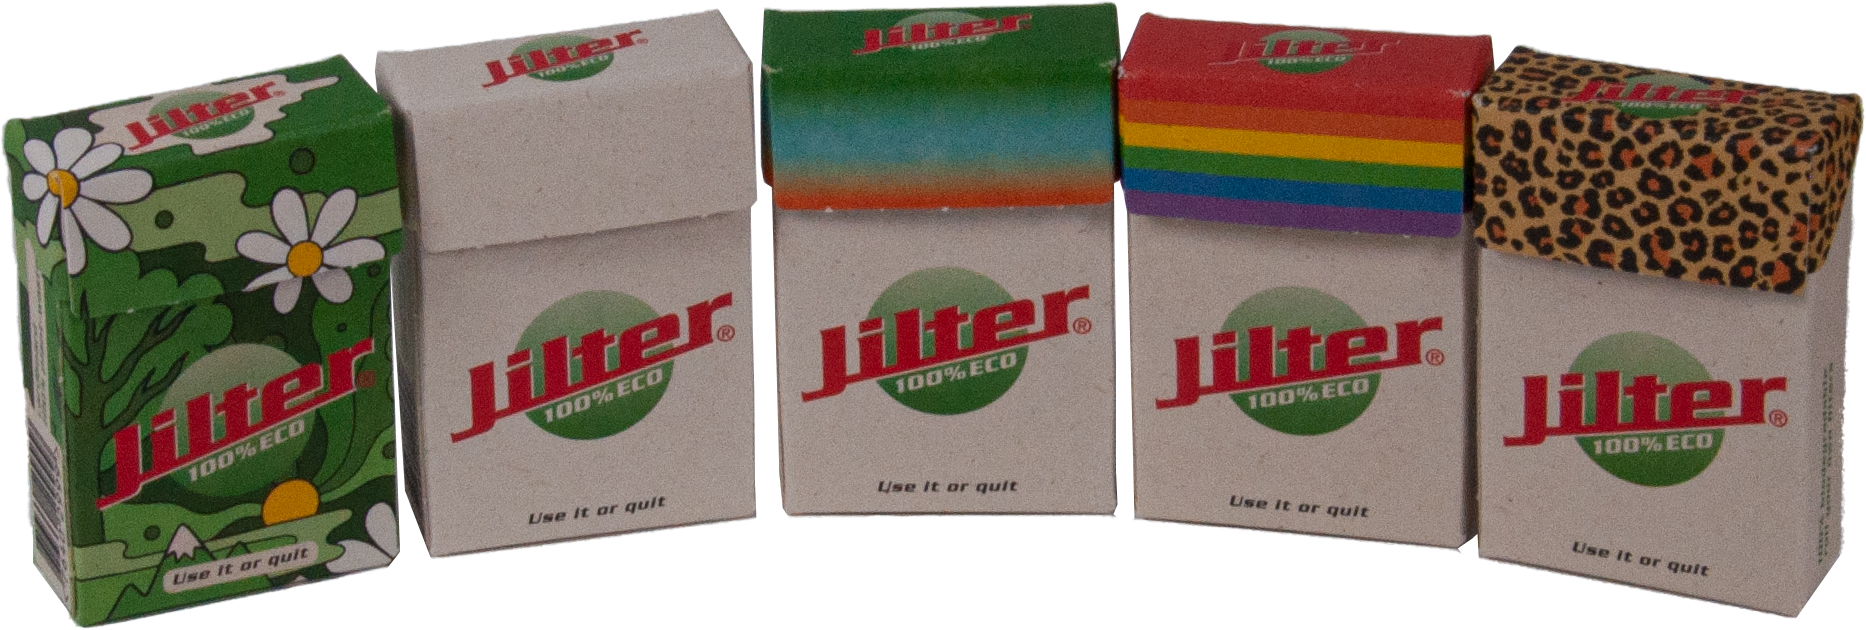 Jilter Filter Eco 100% Filtros esponja